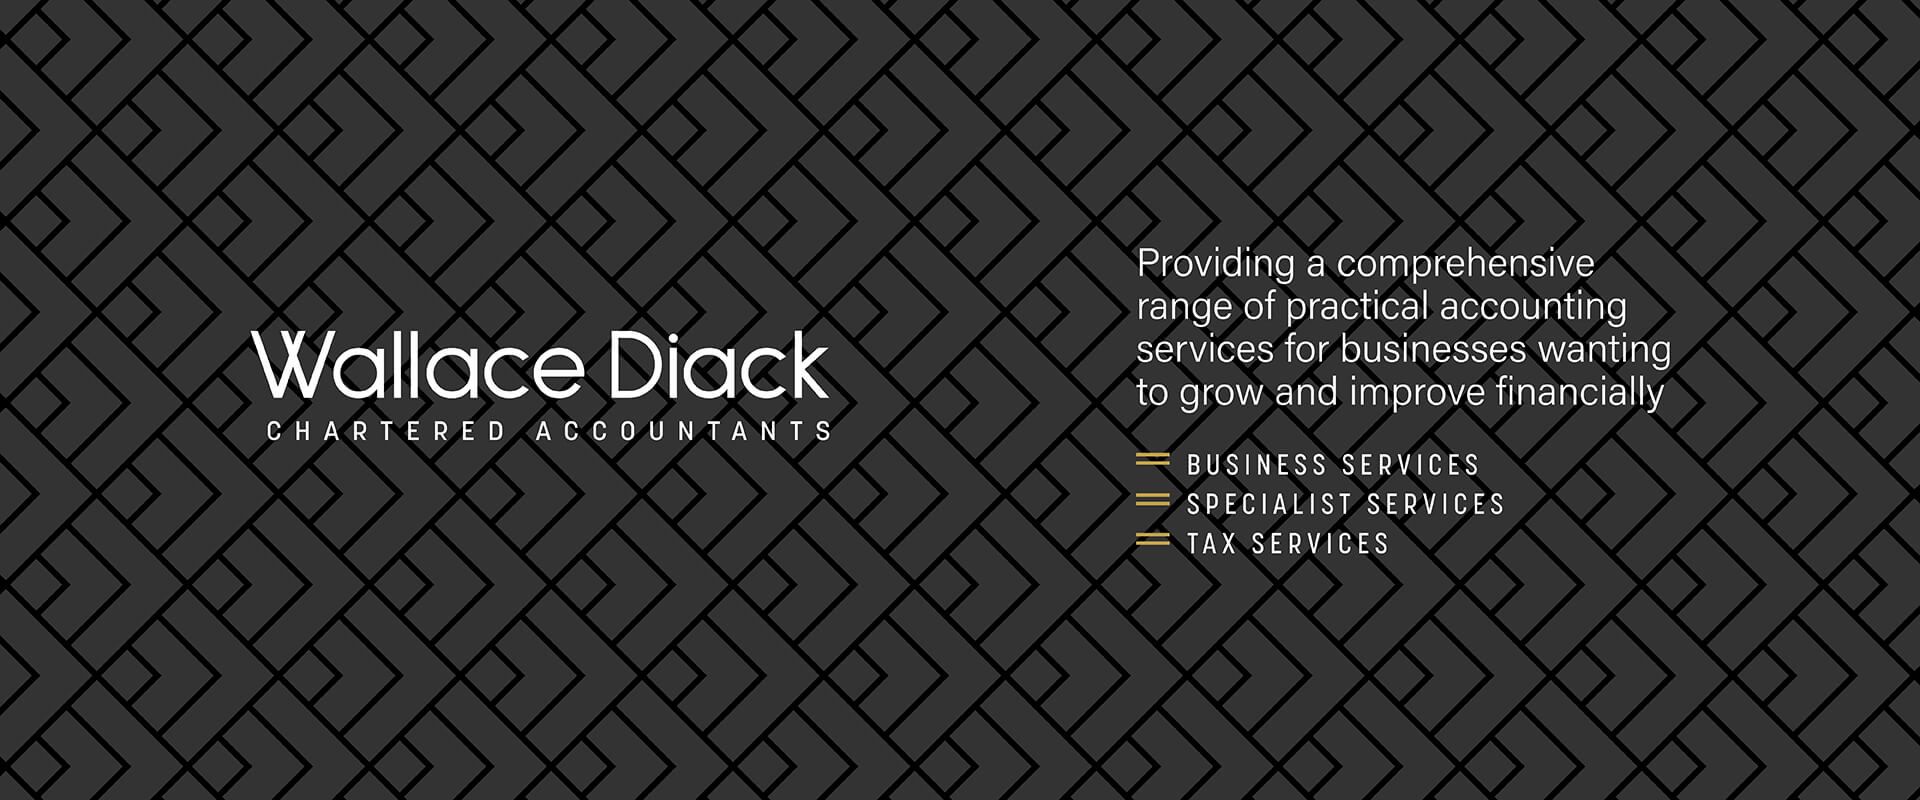 Wallace Diack branding by Vanilla Hayes Ltd in Blenheim, New Zealand